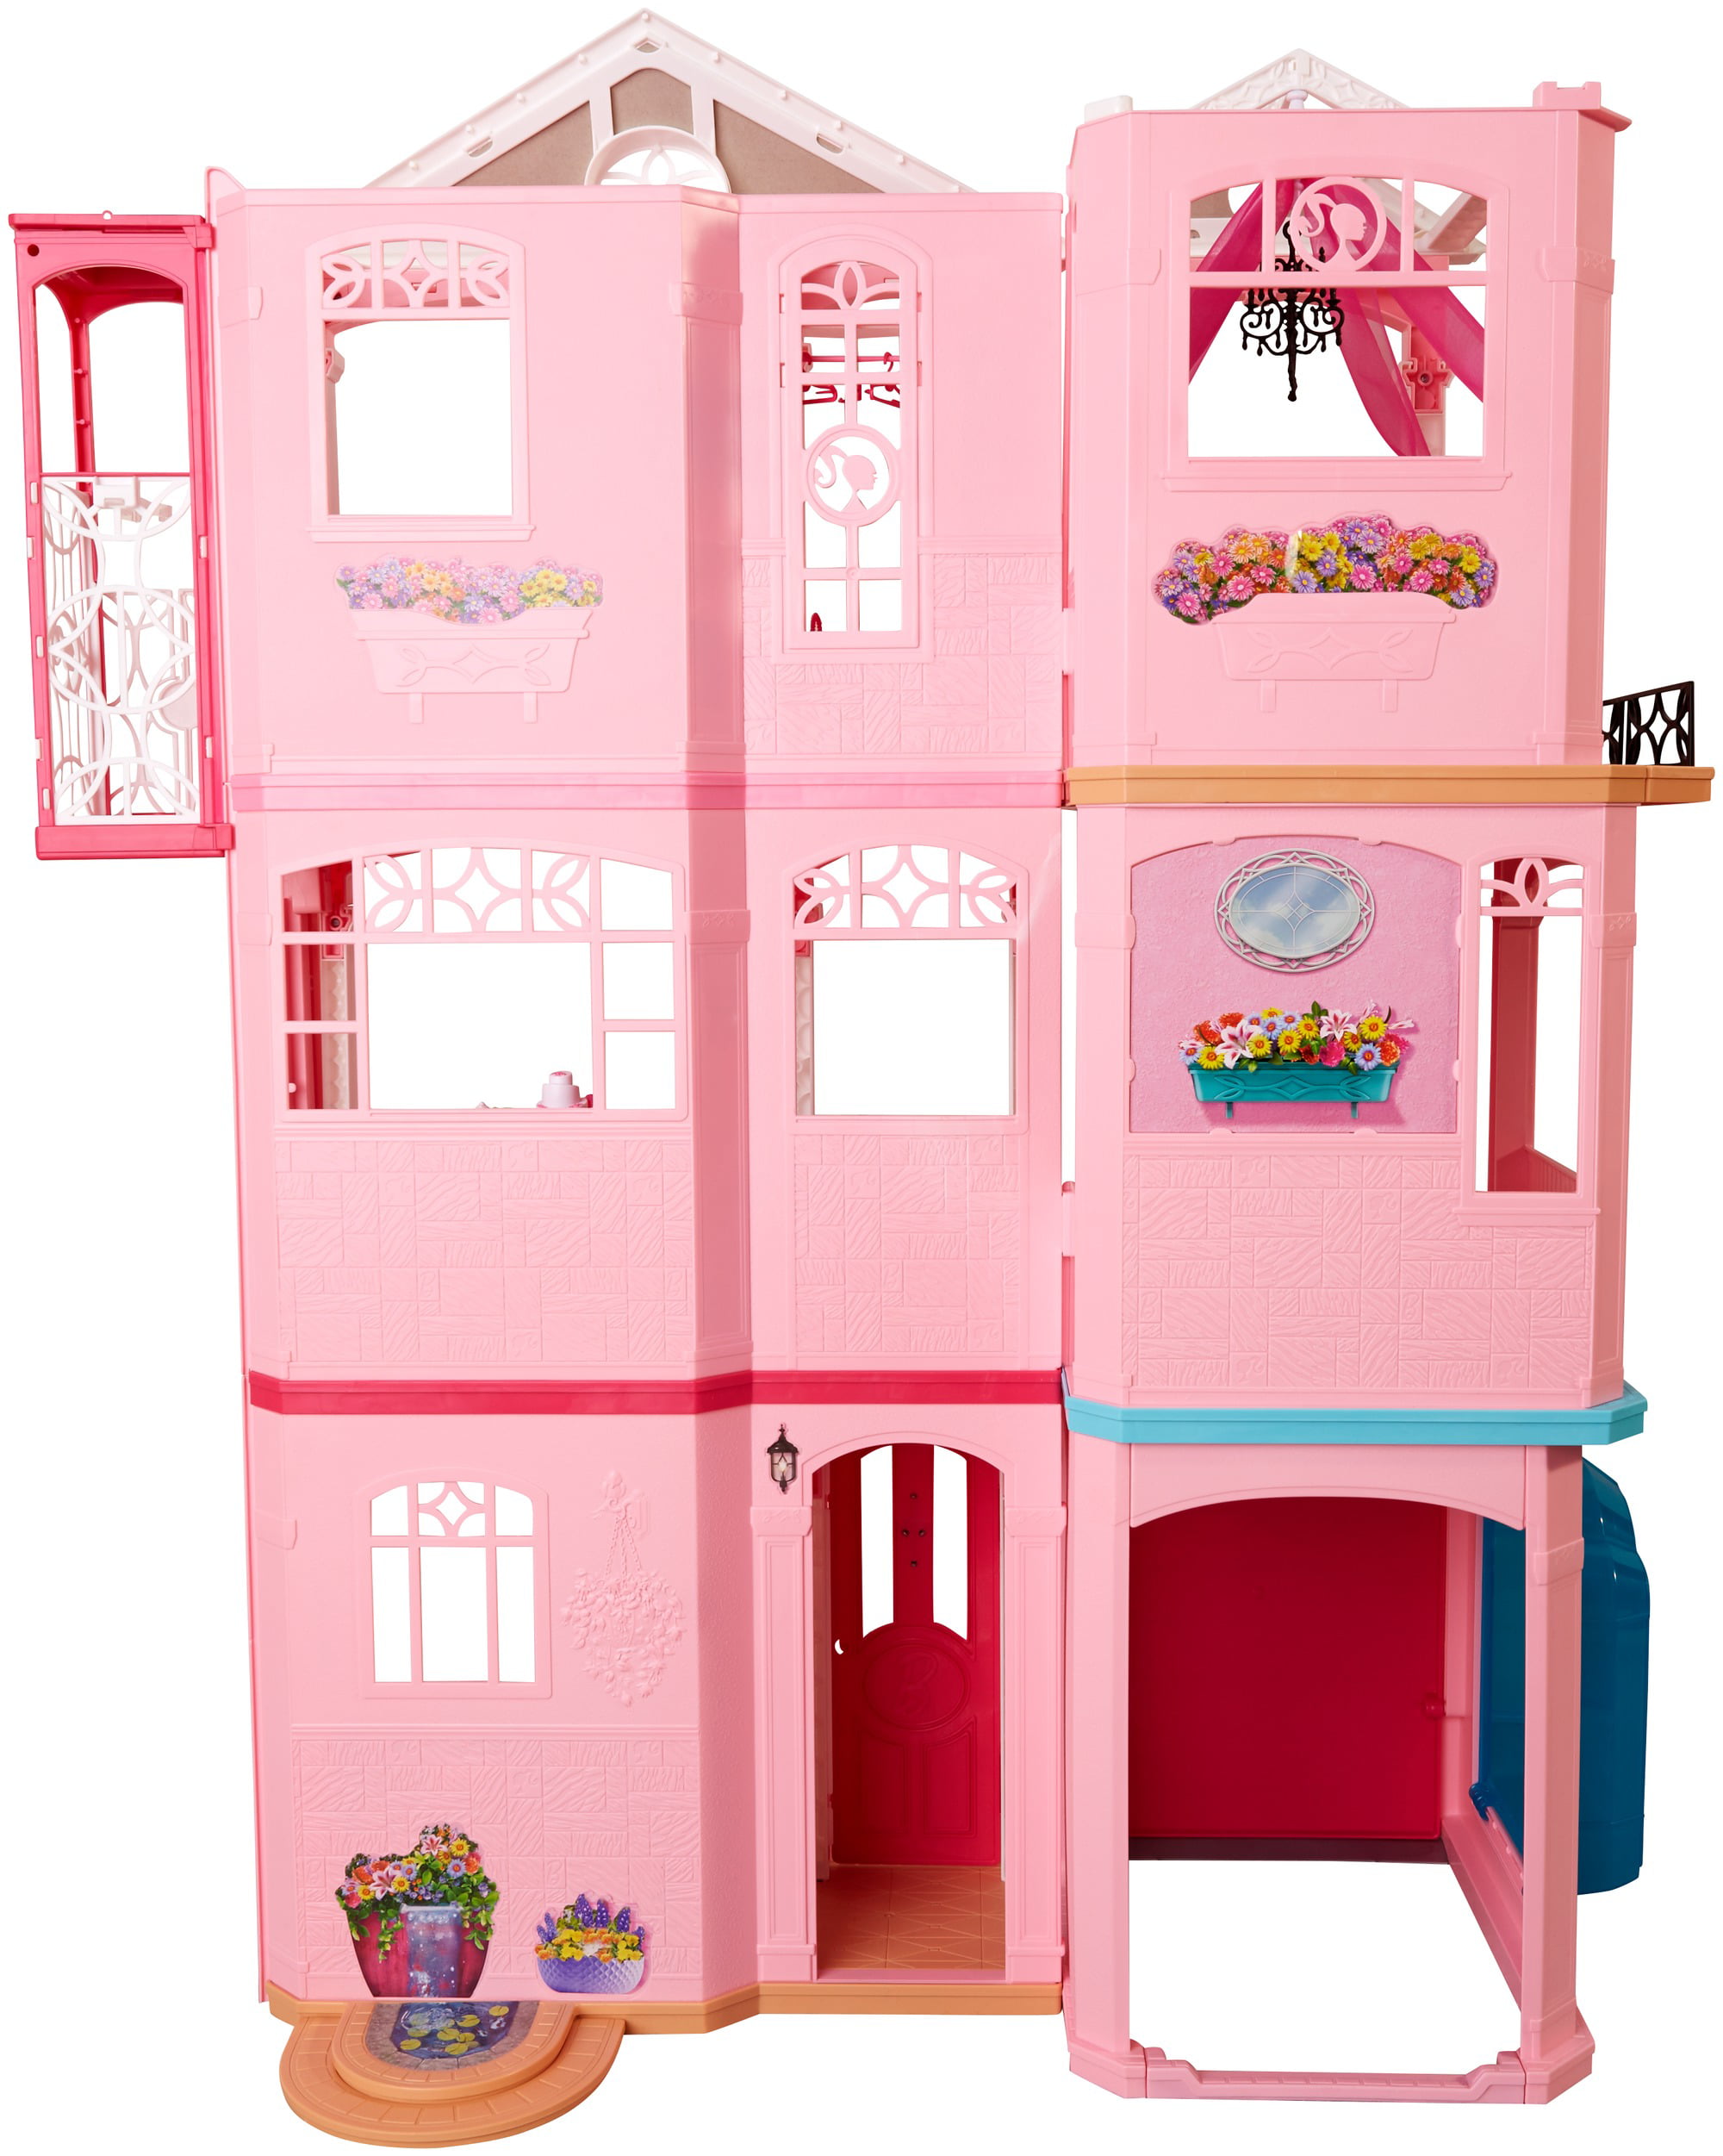 barbie dream house toy price